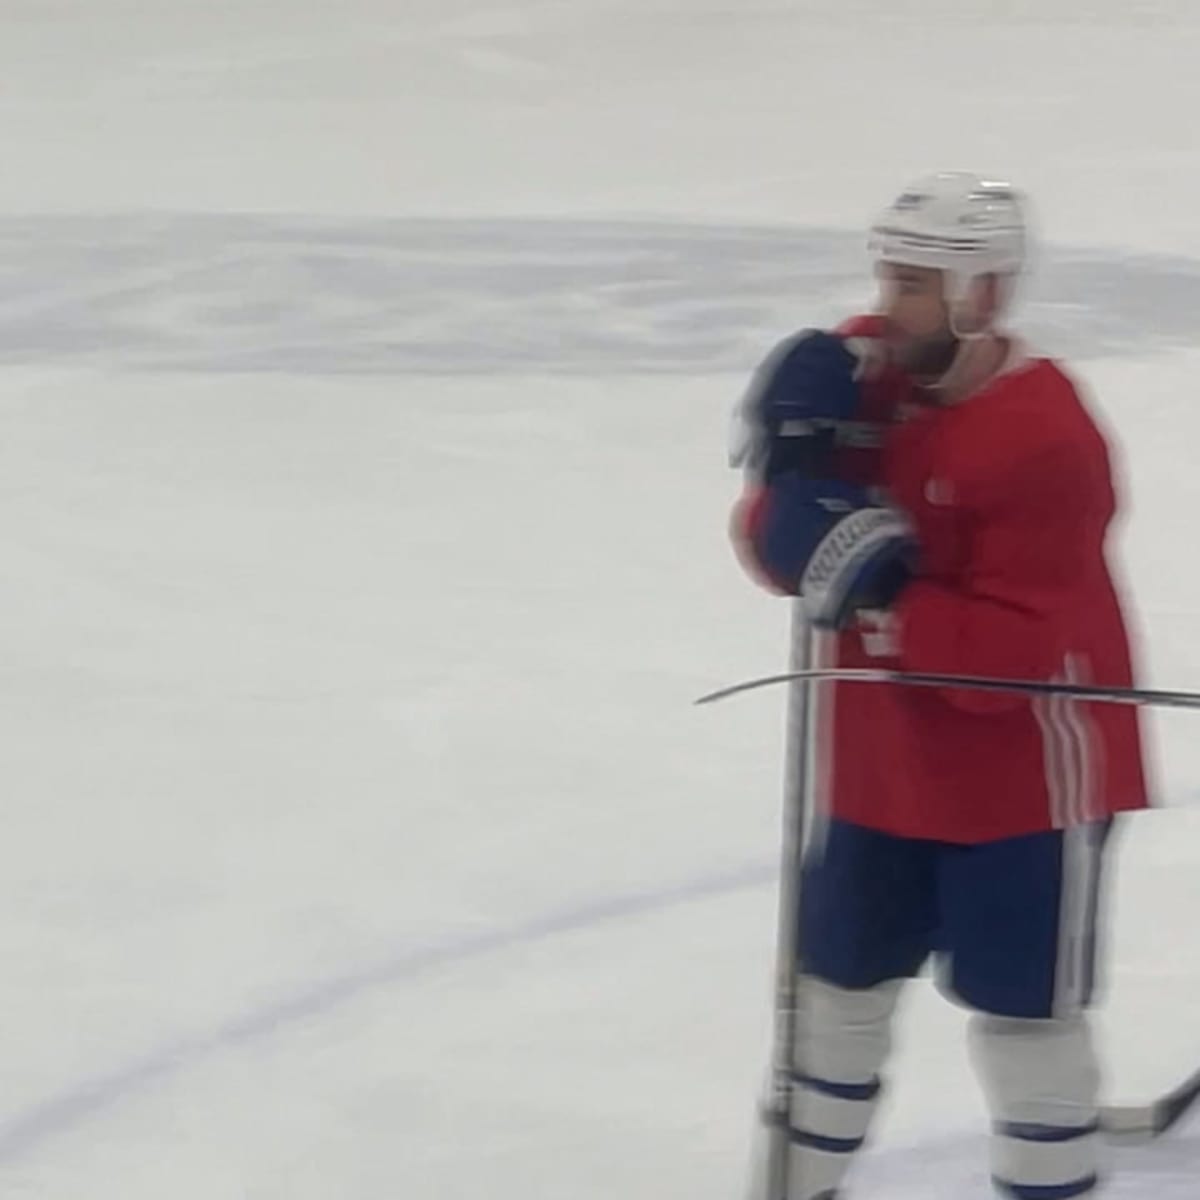 Maple Leafs goaltender Matt Murray (hip) out at least 4 weeks - ESPN